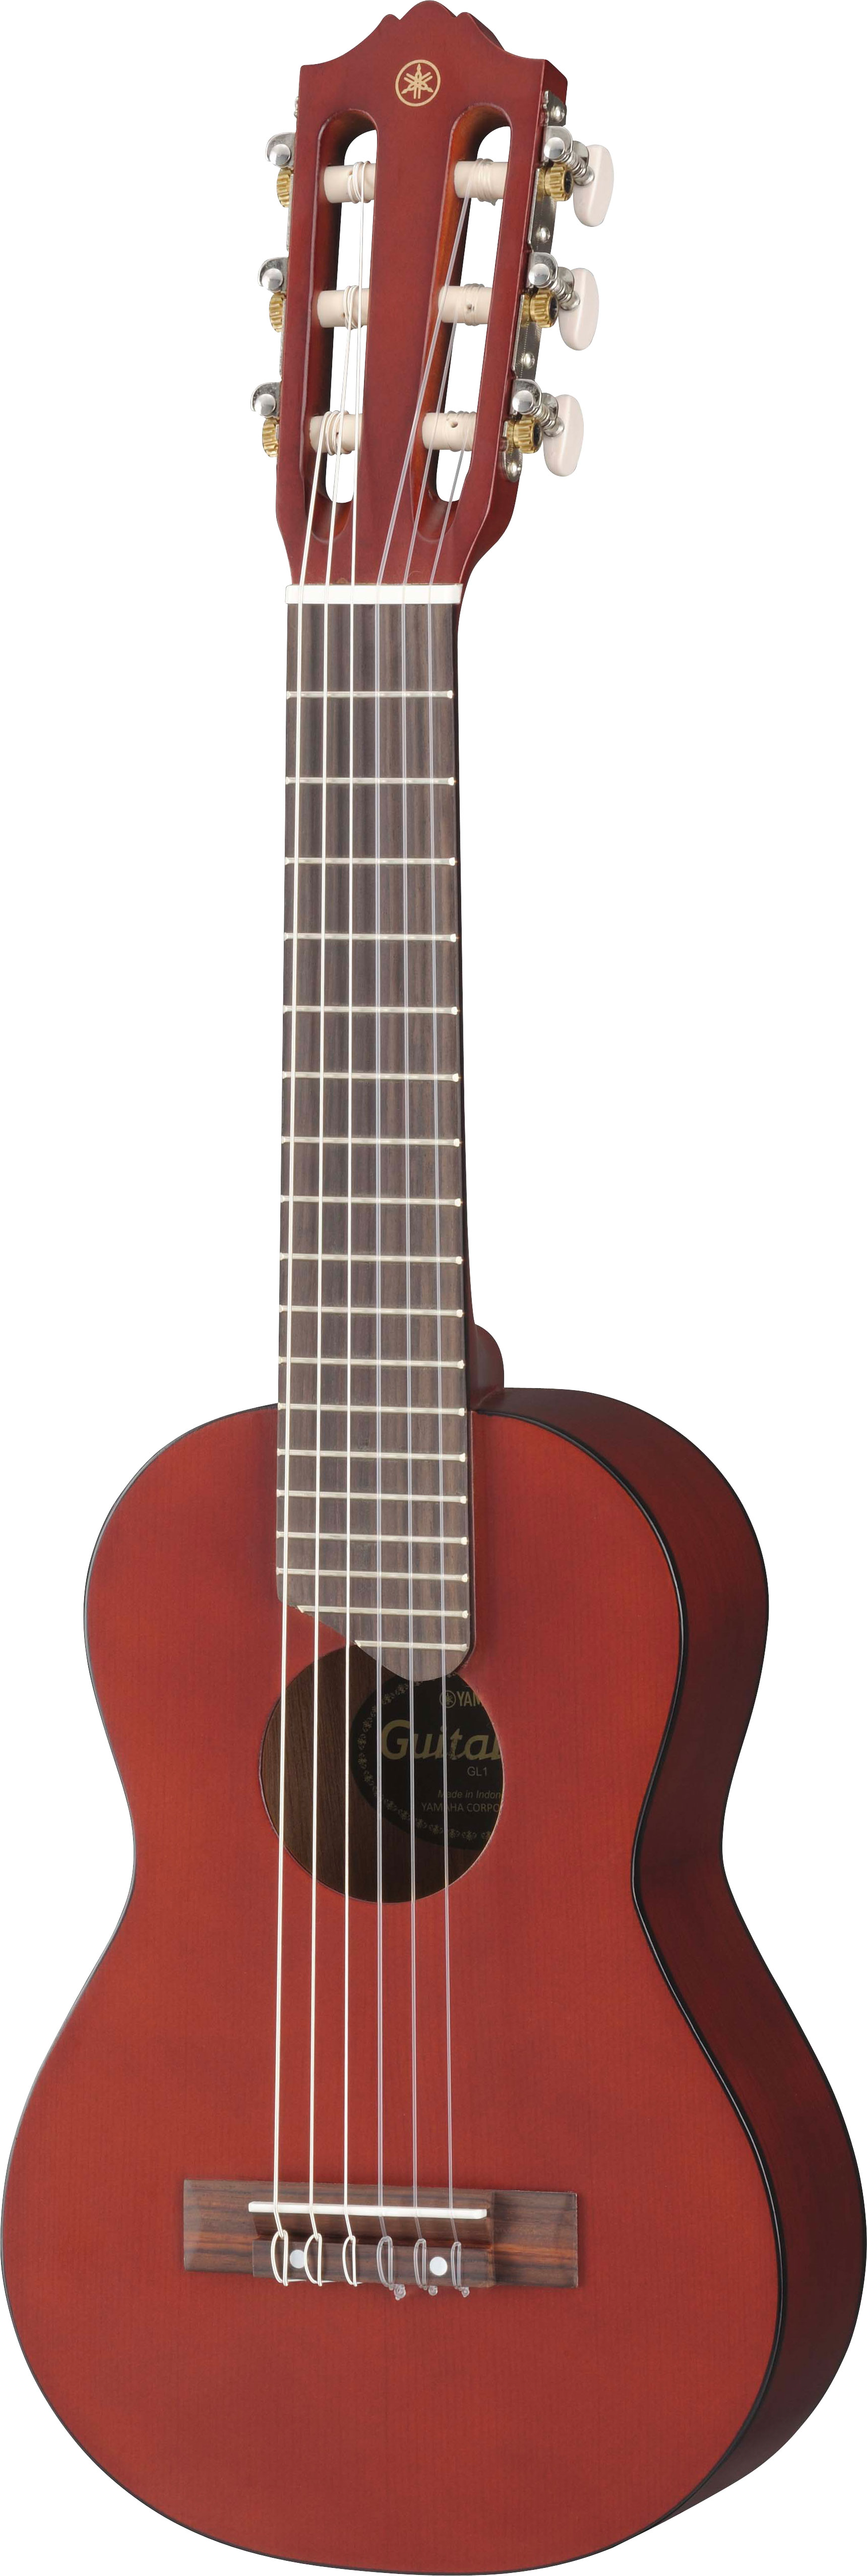 Yamaha GL1 PERSIMON BROWN классическая гитара малого размера (433 мм)